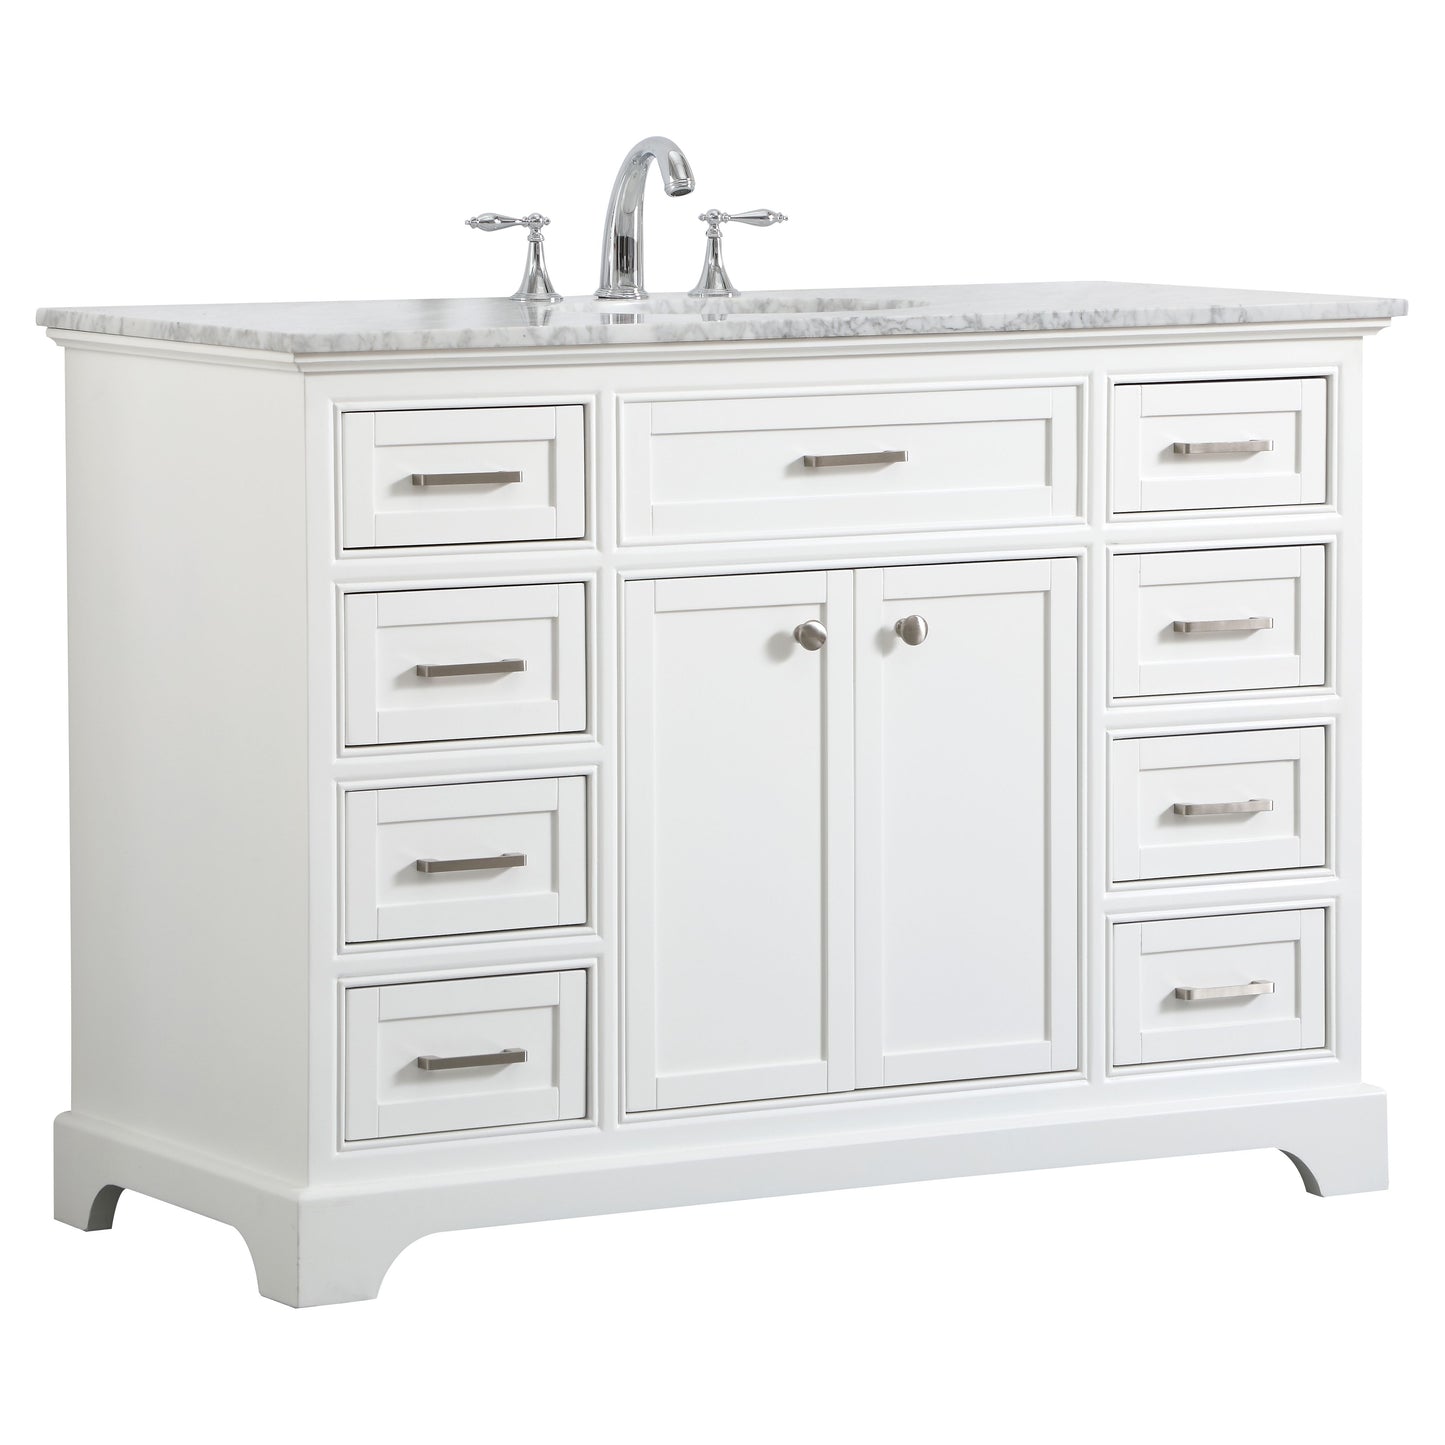 VF15048WH 48" Single Bathroom Vanity Set in White